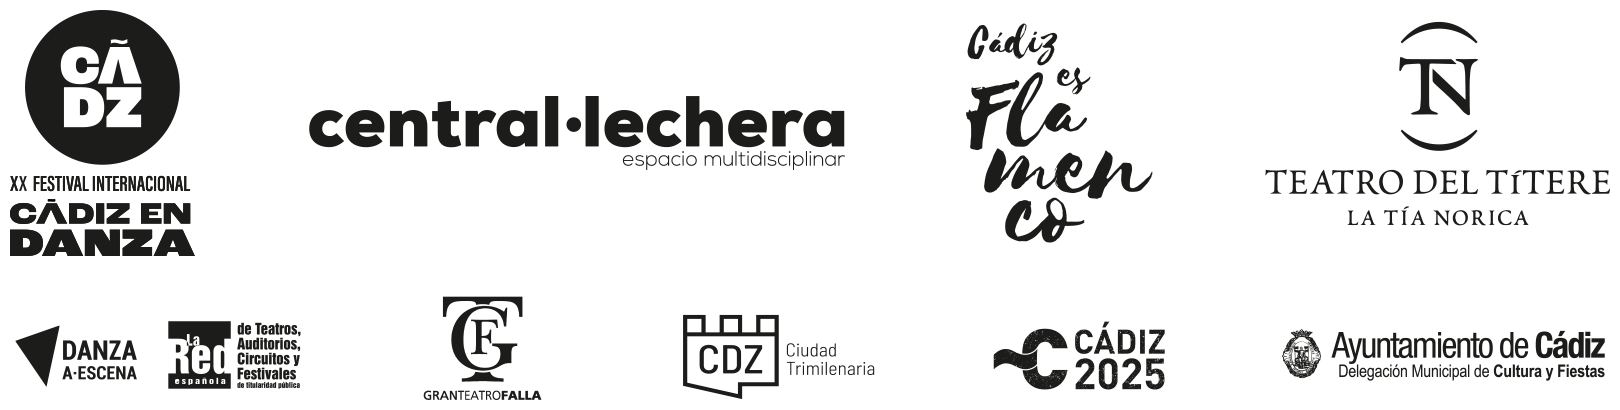 Logos teatros Cádiz